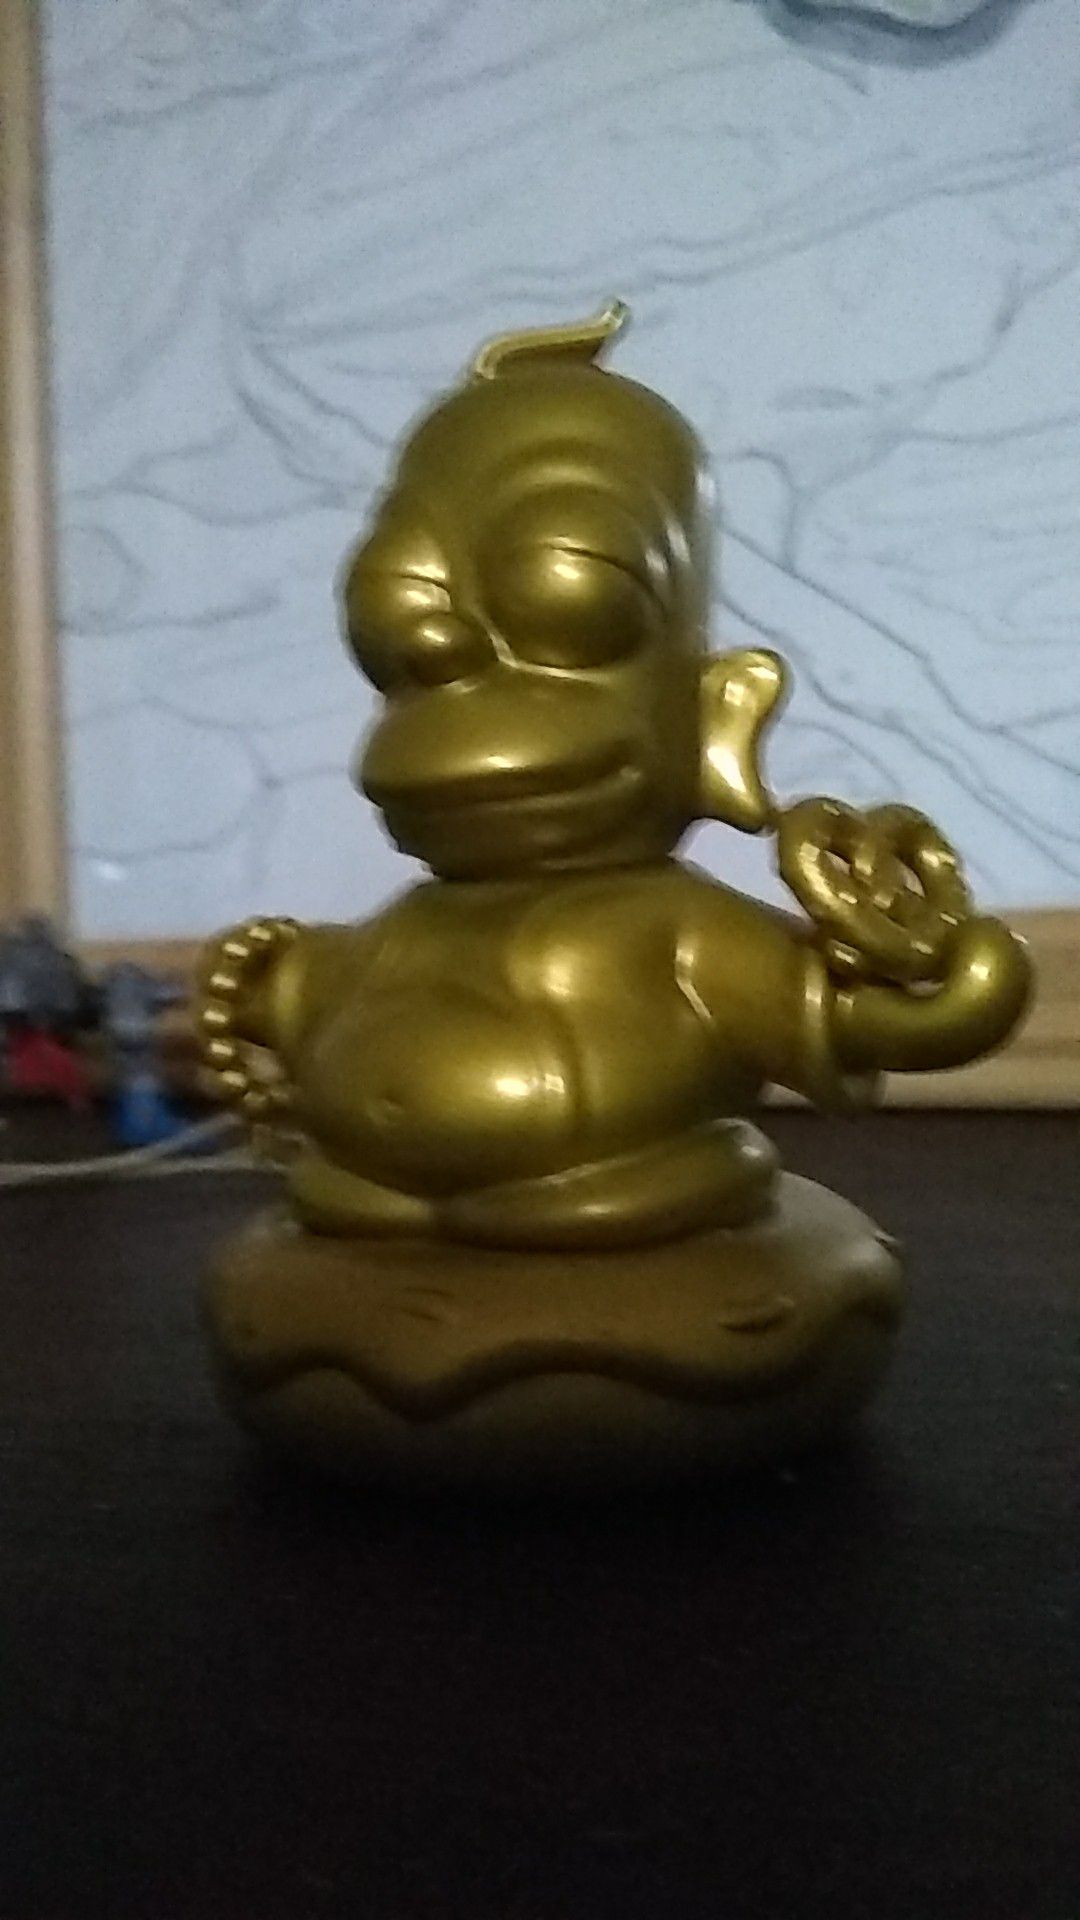 Enlightened Homer Buddha toy figurine